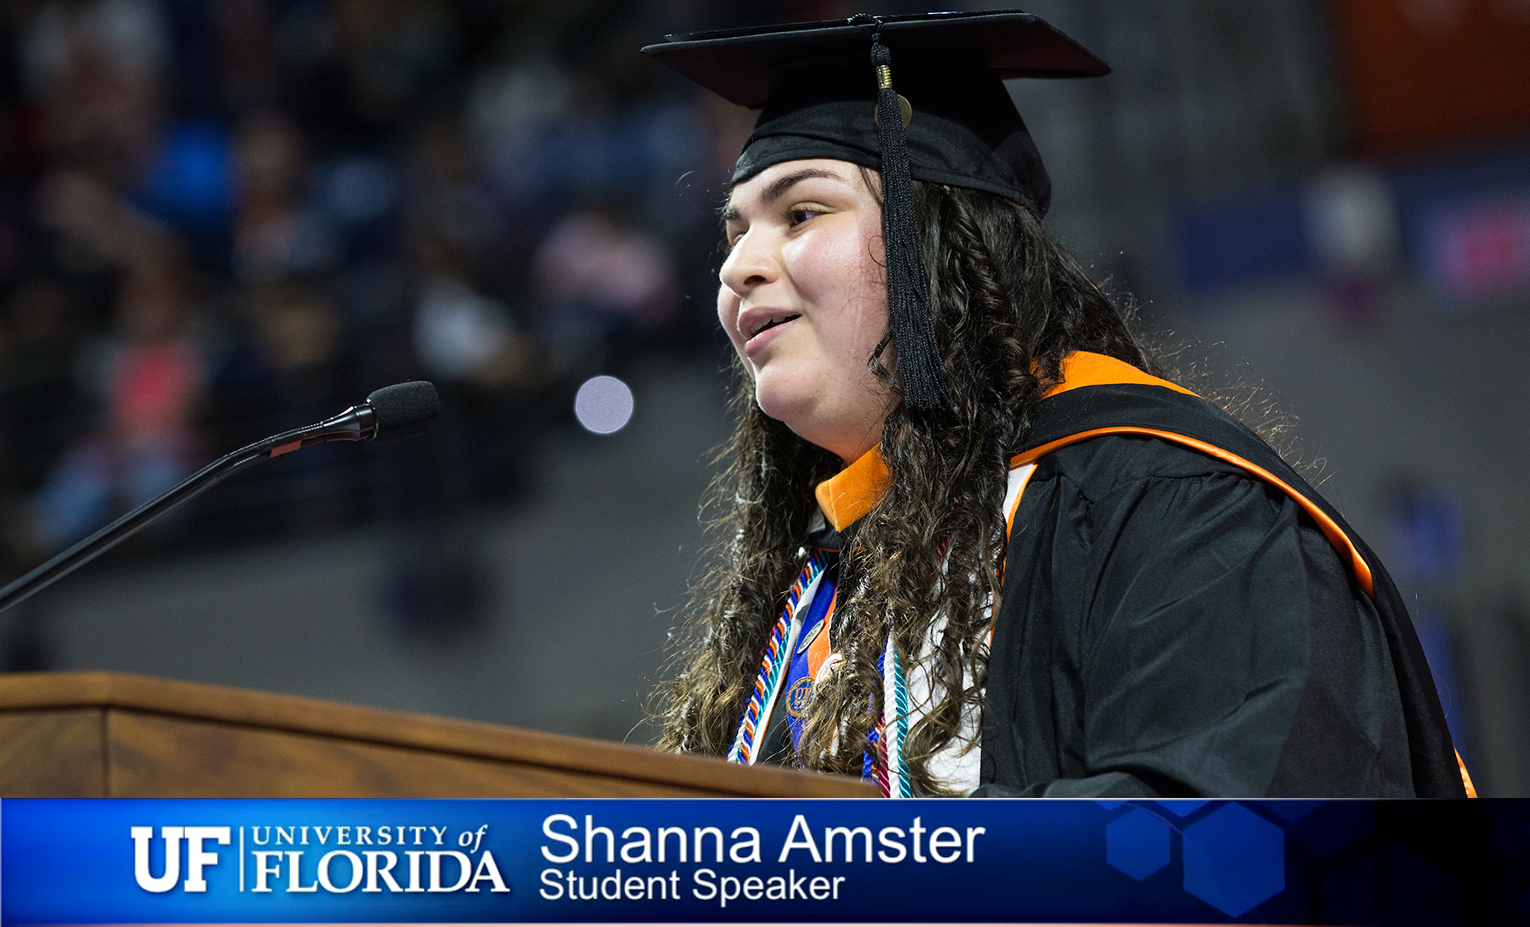 Shanna Amster at podium during graduation.